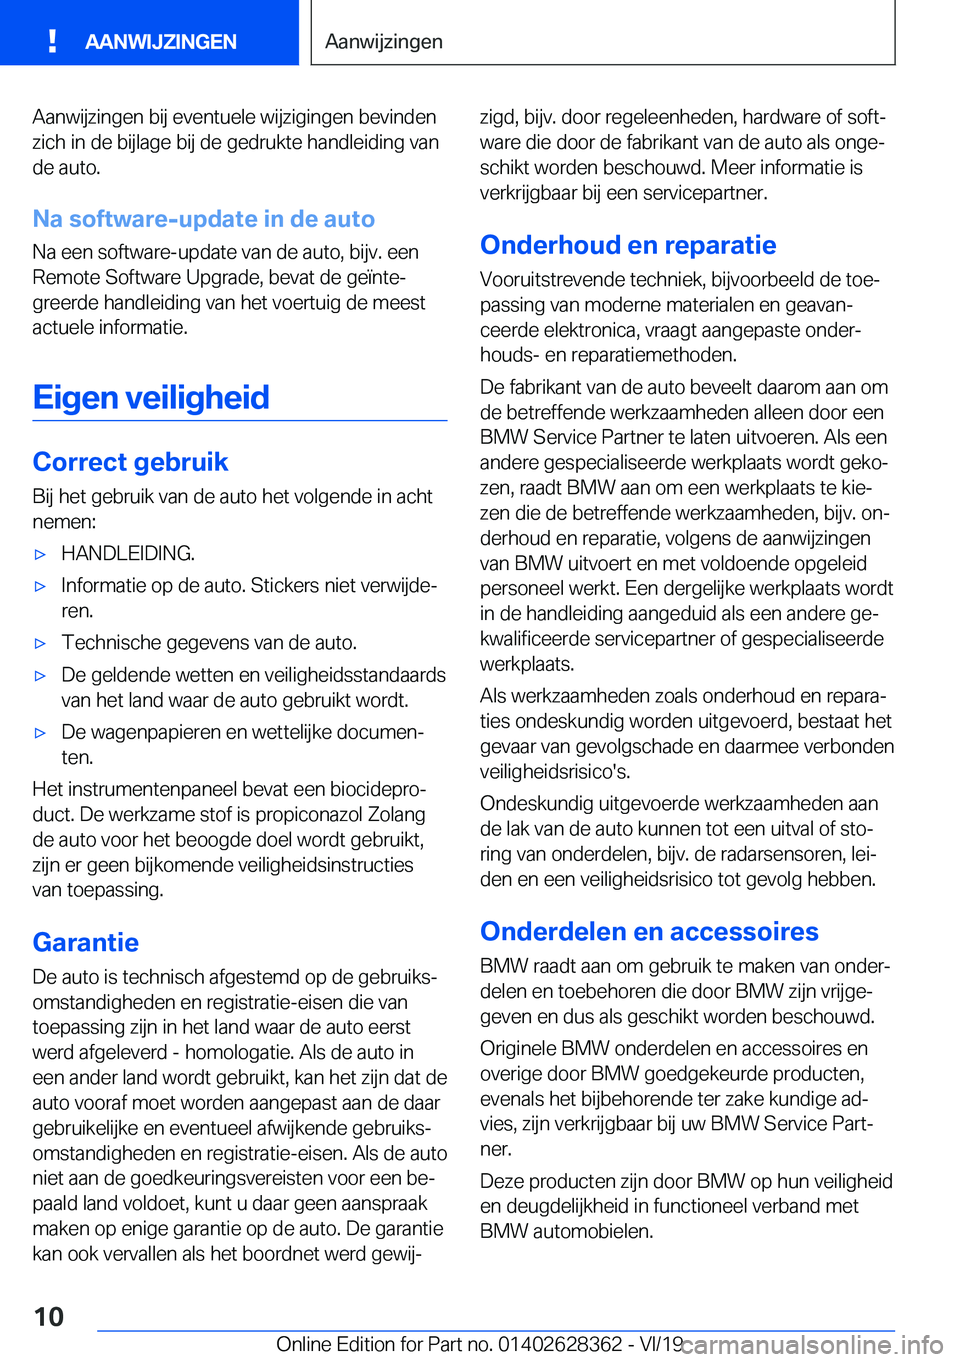 BMW 8 SERIES COUPE 2020  Instructieboekjes (in Dutch) �A�a�n�w�i�j�z�i�n�g�e�n��b�i�j��e�v�e�n�t�u�e�l�e��w�i�j�z�i�g�i�n�g�e�n��b�e�v�i�n�d�e�n�z�i�c�h��i�n��d�e��b�i�j�l�a�g�e��b�i�j��d�e��g�e�d�r�u�k�t�e��h�a�n�d�l�e�i�d�i�n�g��v�a�n
�d�e�